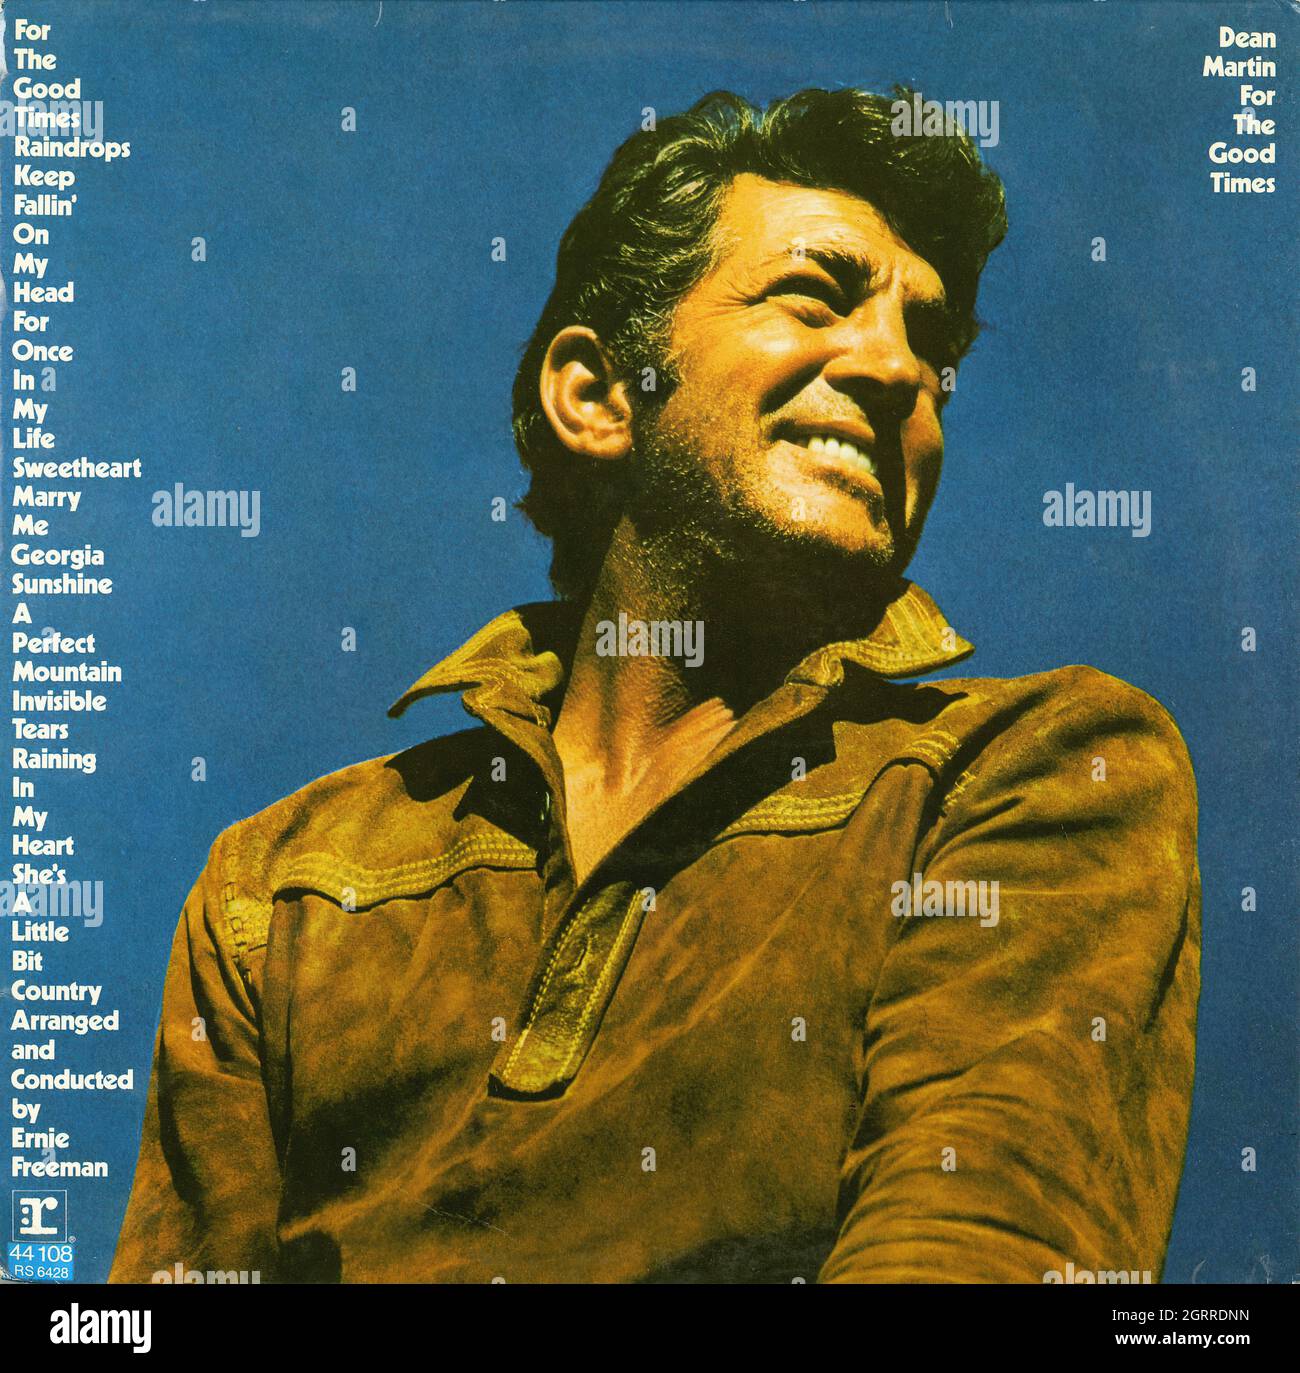 Dean Martin - For The Good Times -  Vintage Musical Vinyl Album Stock Photo